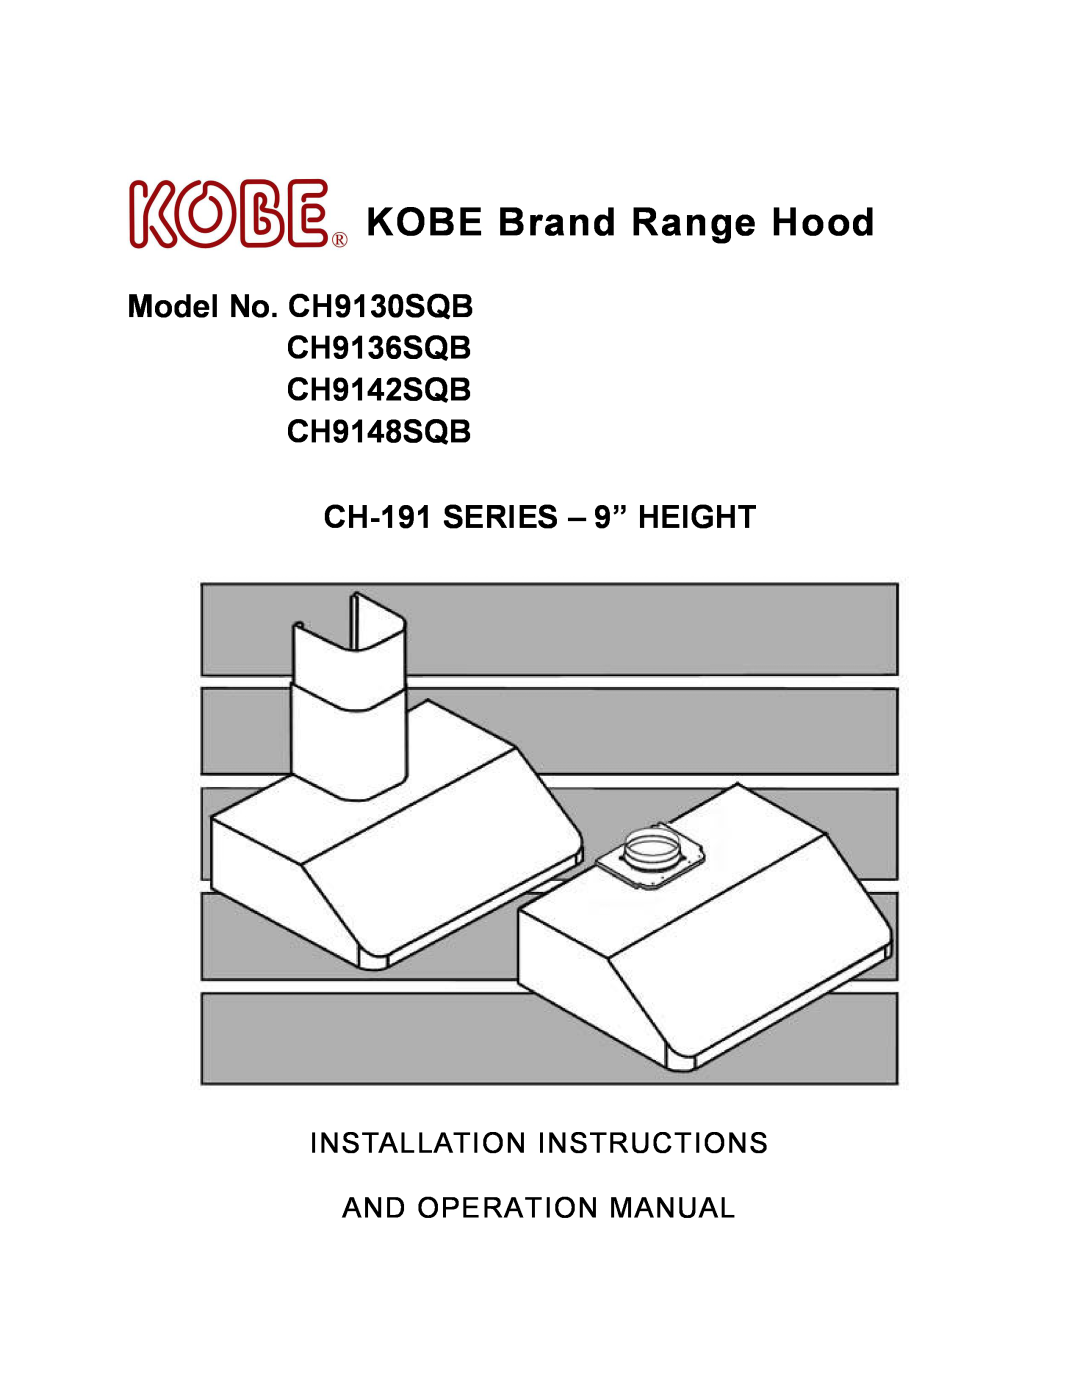 Kobe Range Hoods CH9148SQB, CH9136SQB, CH9142SQB installation instructions KOBE Brand Range Hood, CH-191SERIES 9 HEIGHT 